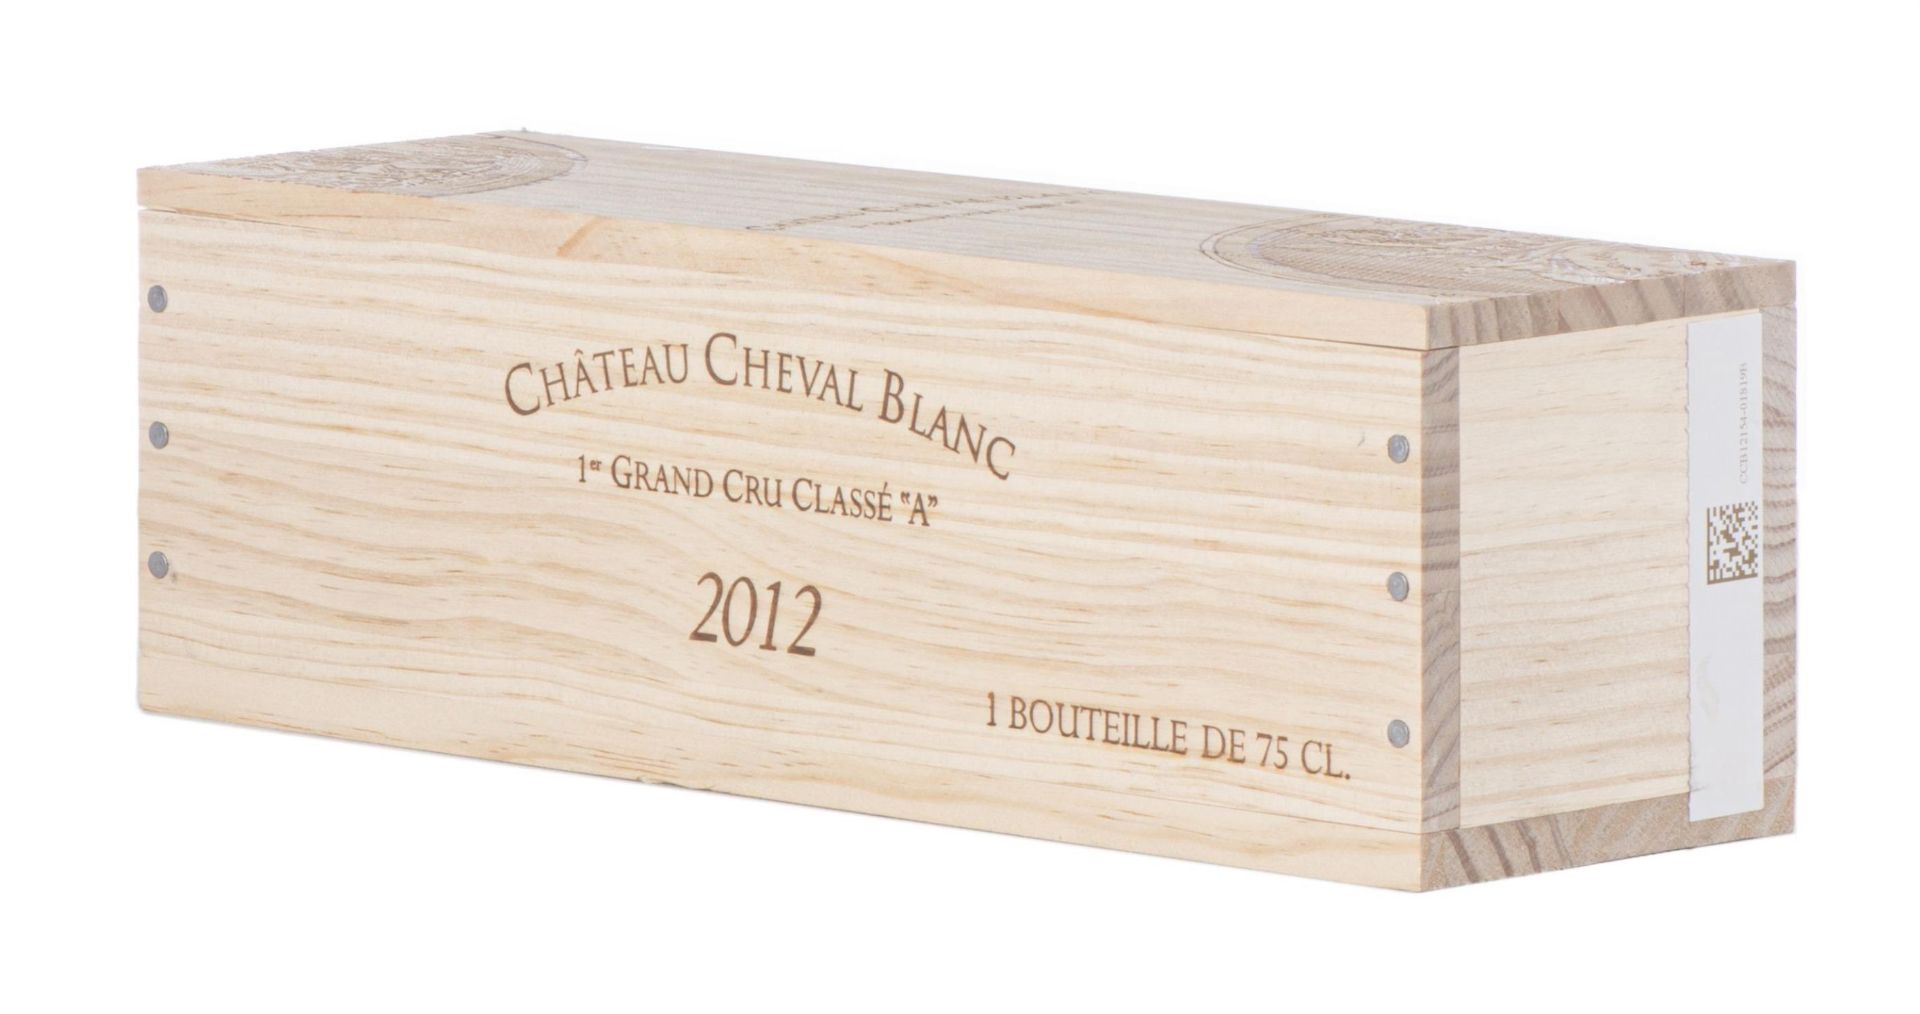 Château Cheval Blanc, 1er Grand Cru classé classé "A", 2012 - Image 2 of 4